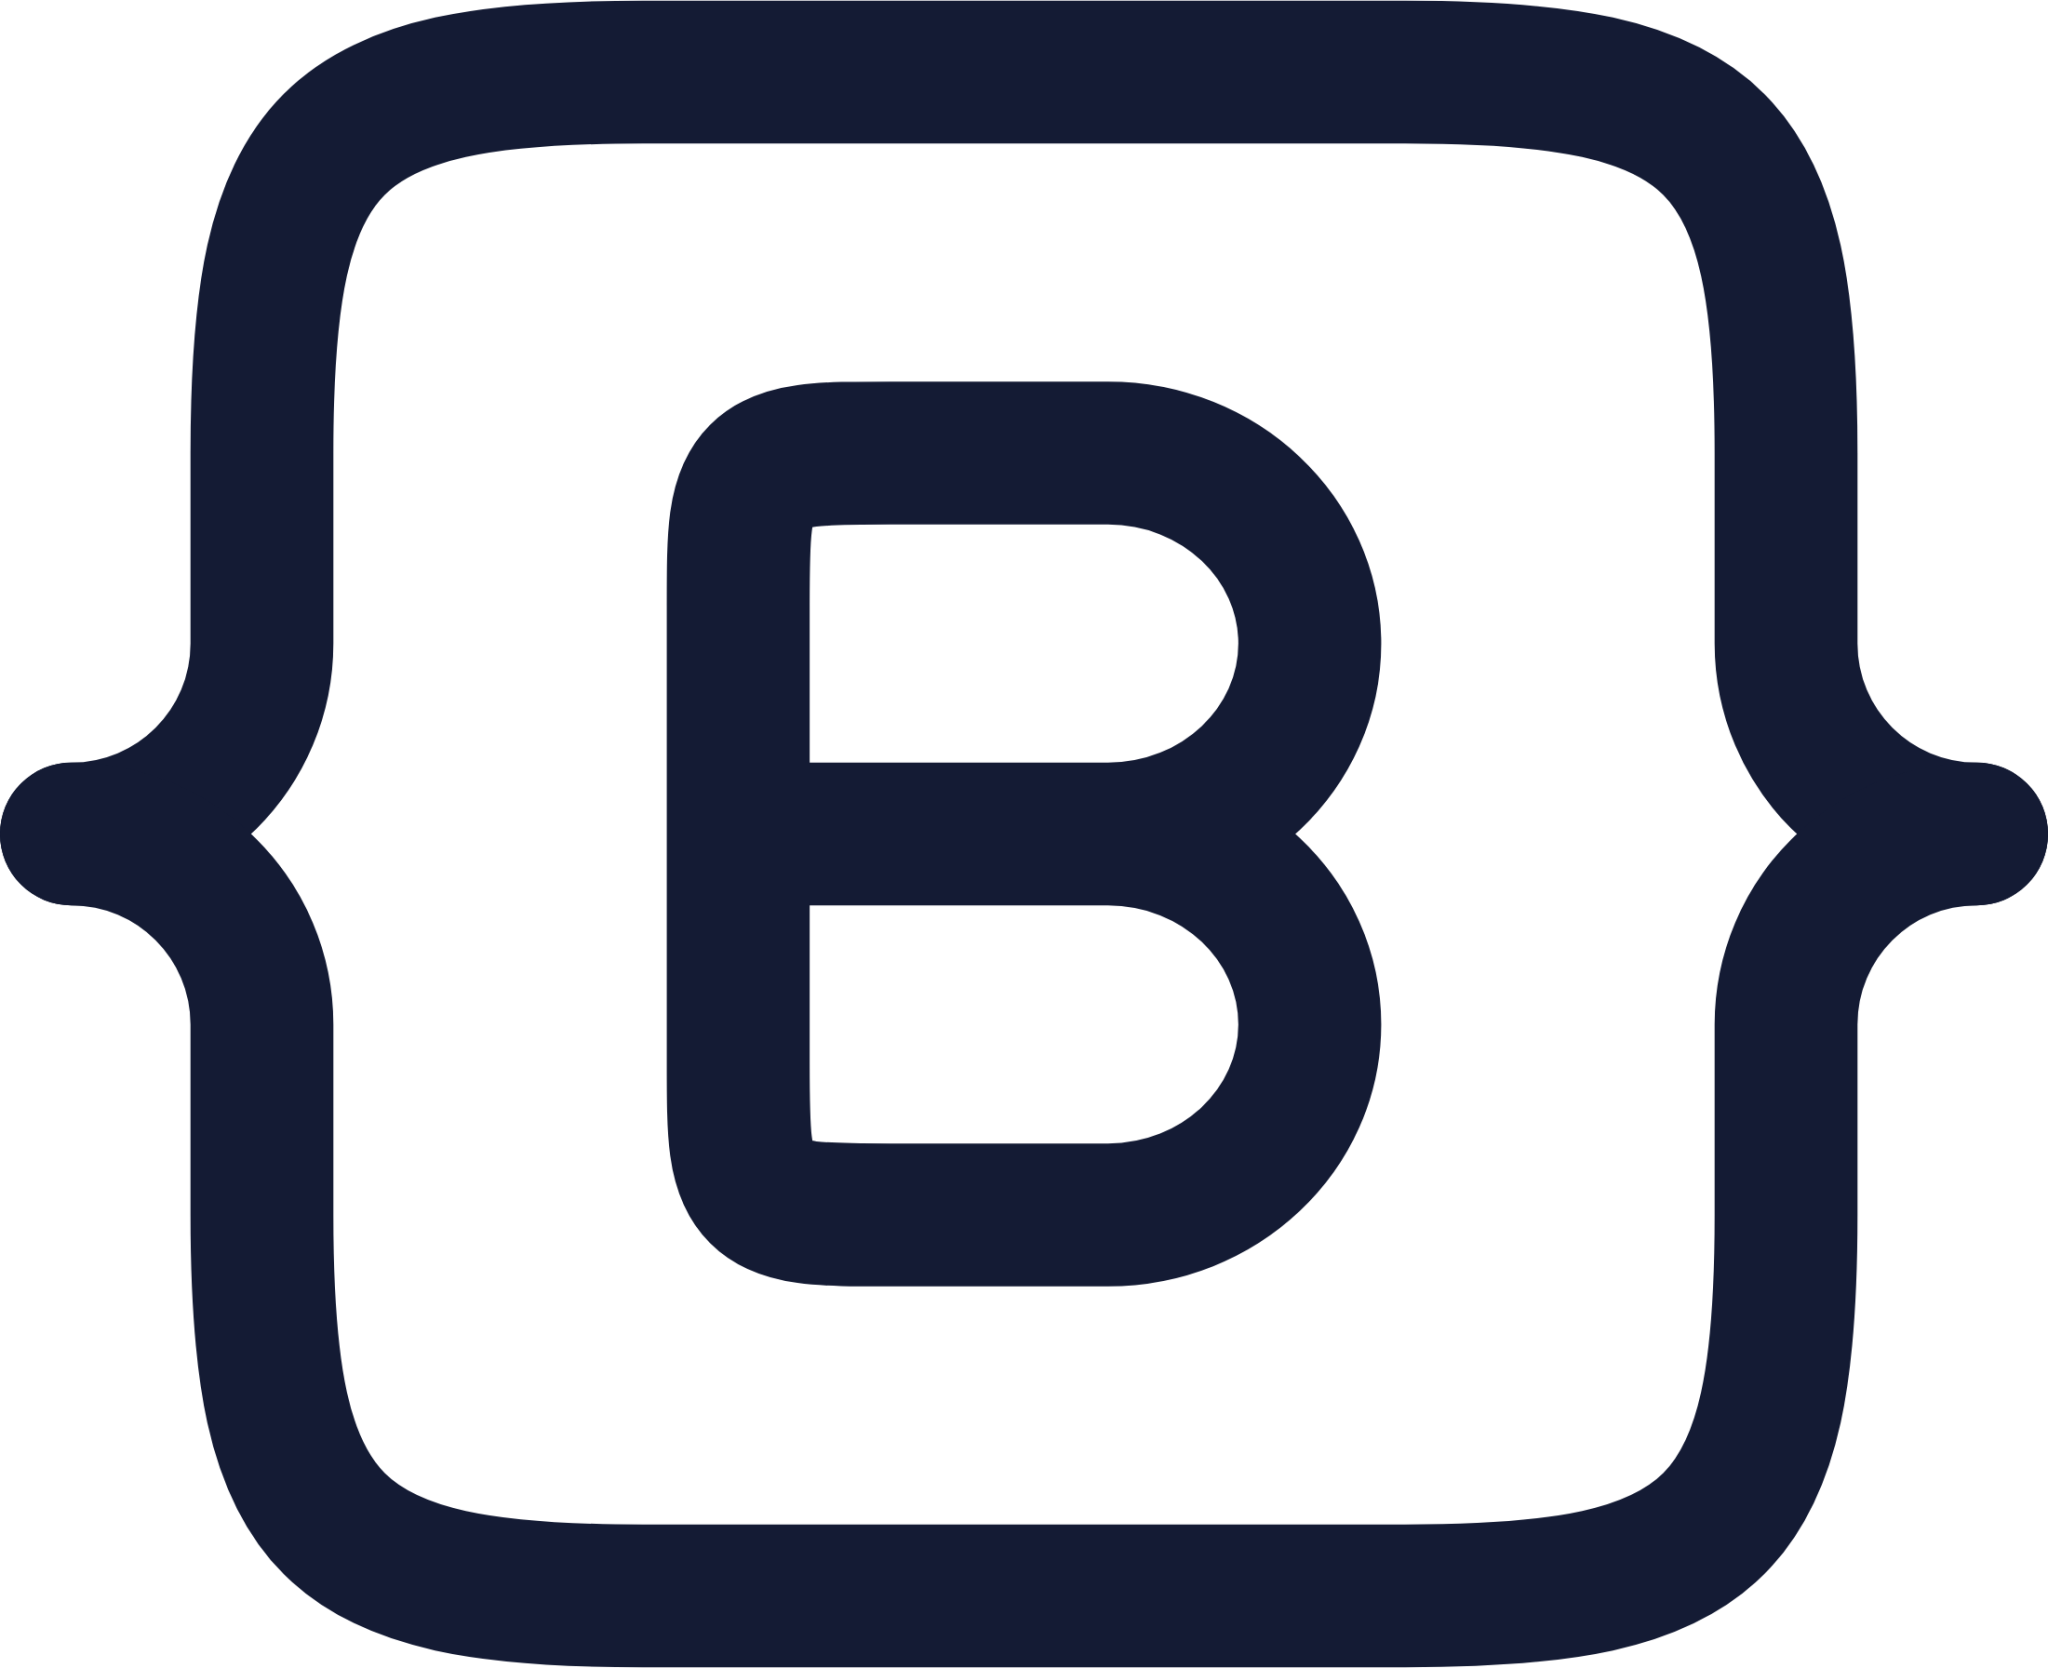 bootstrap icon